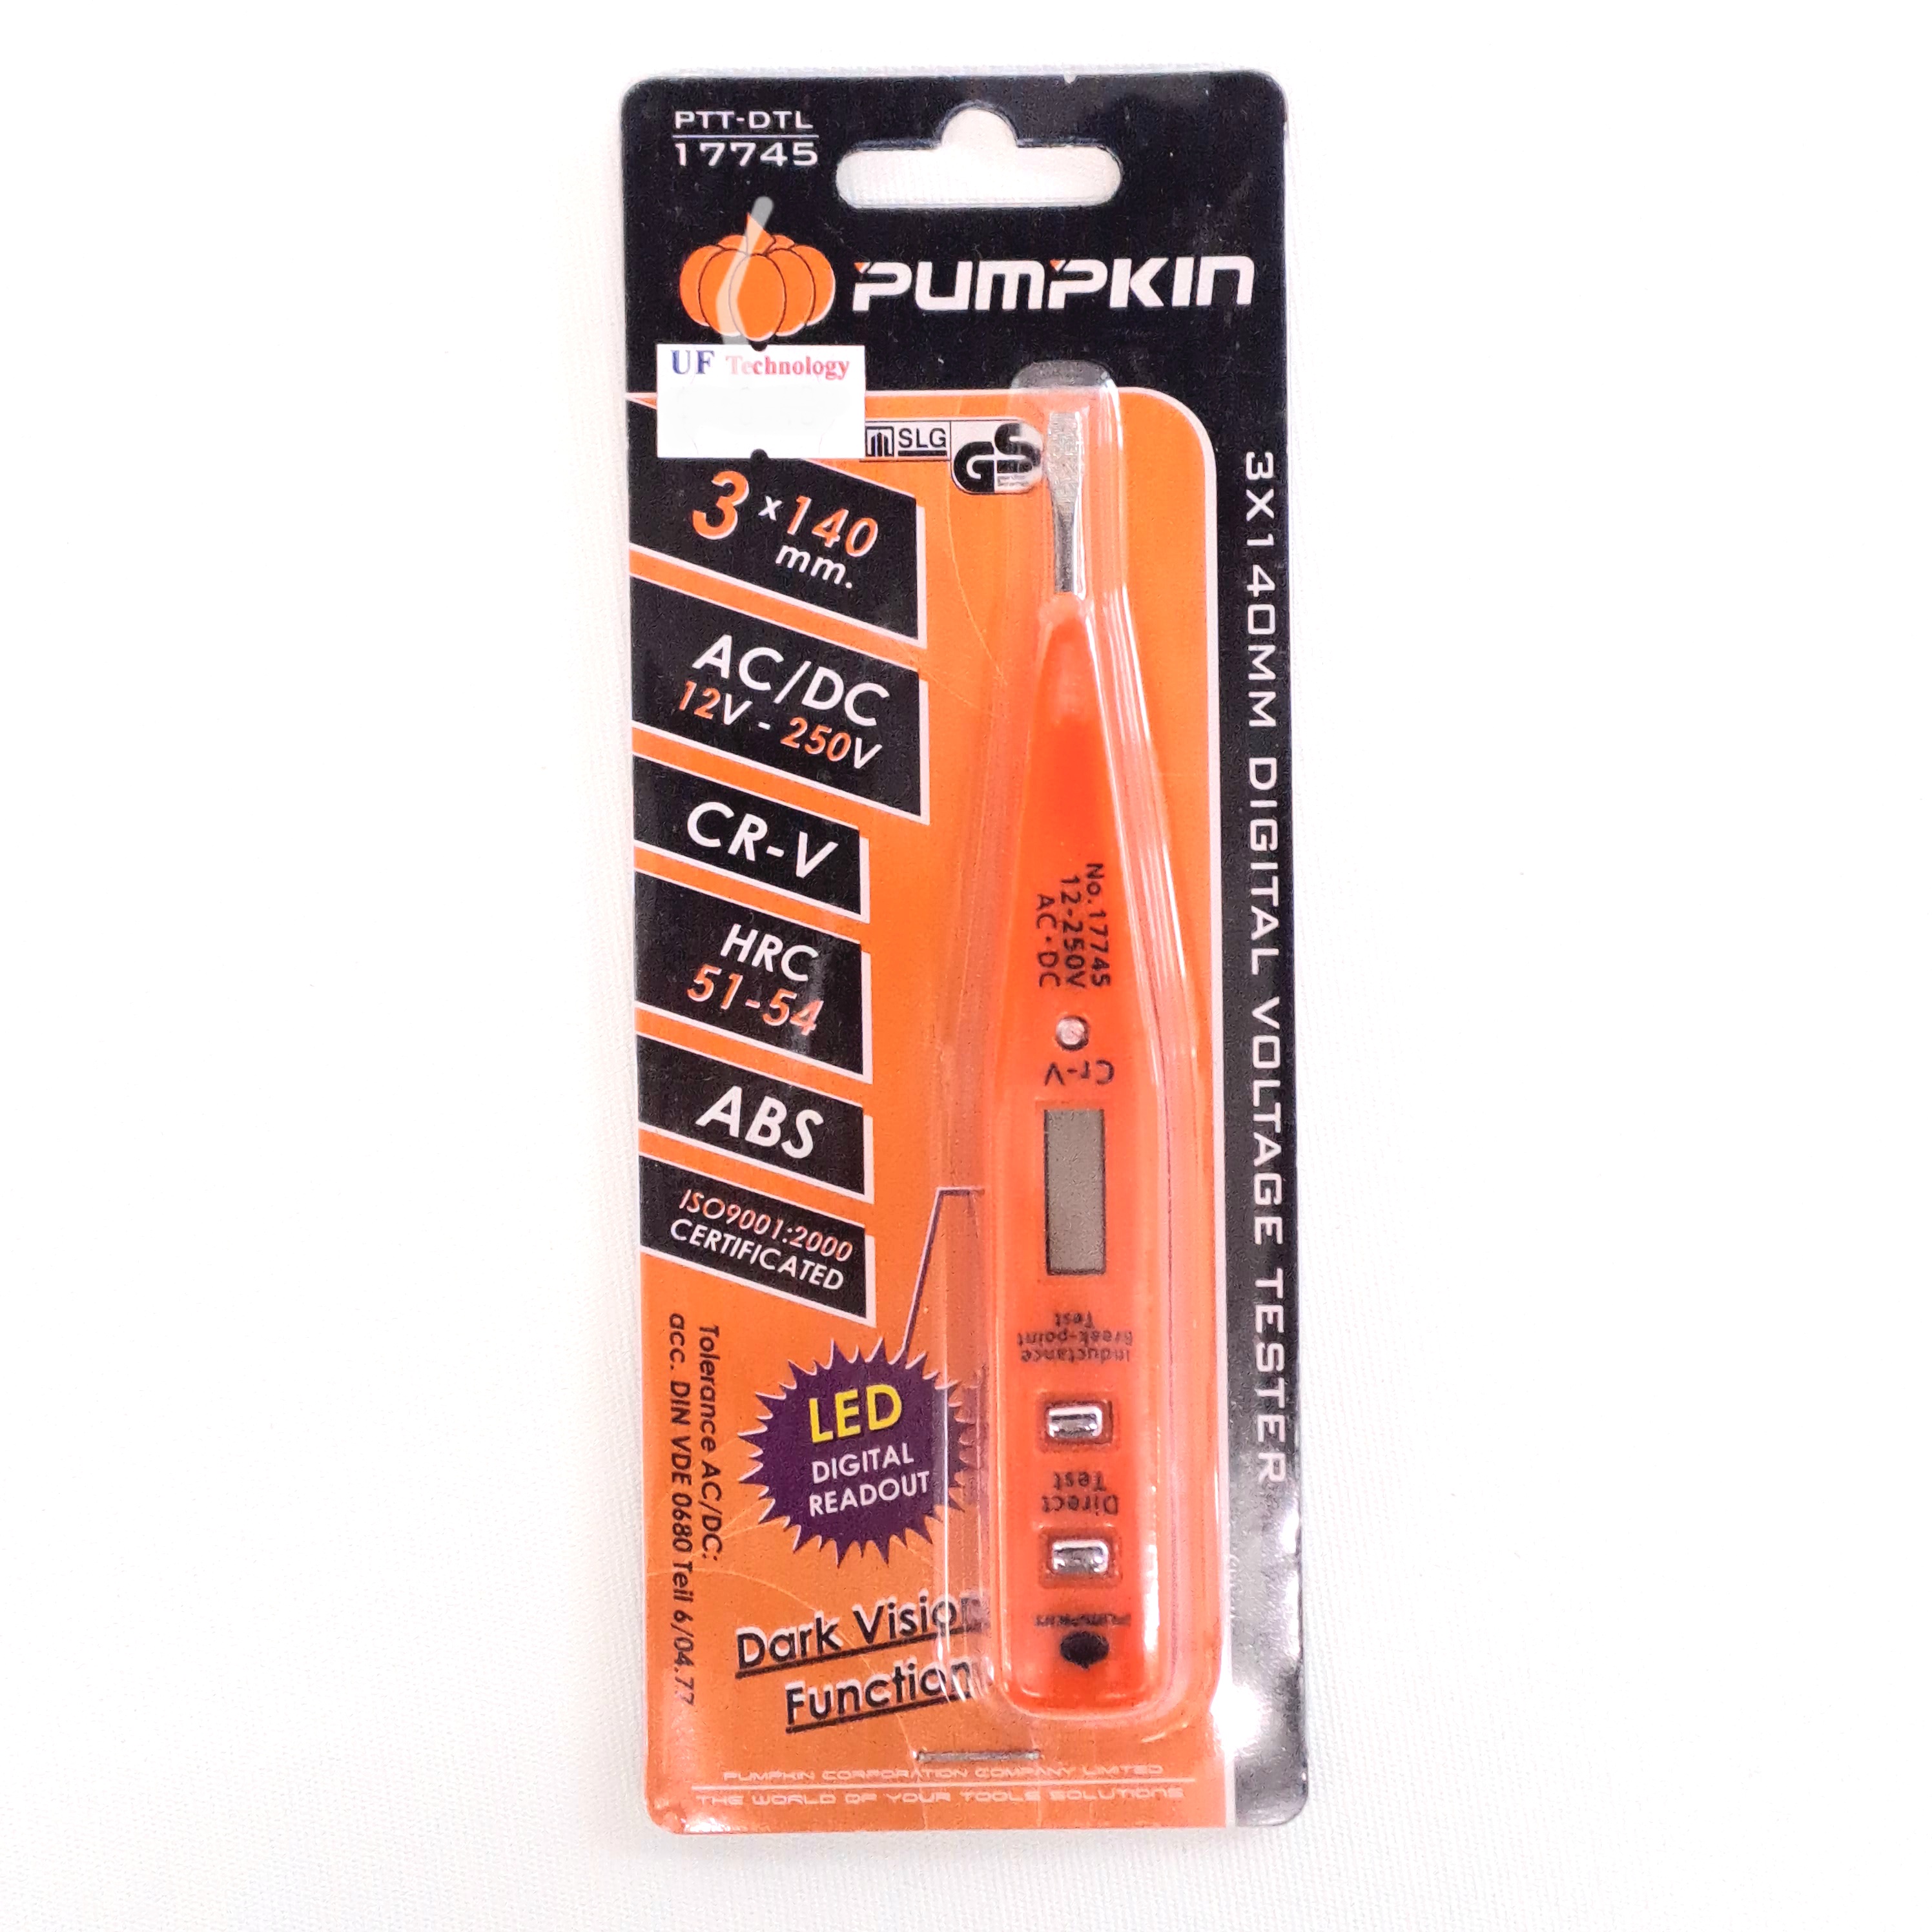 Pumpkin 17745 Digital Voltage Tester